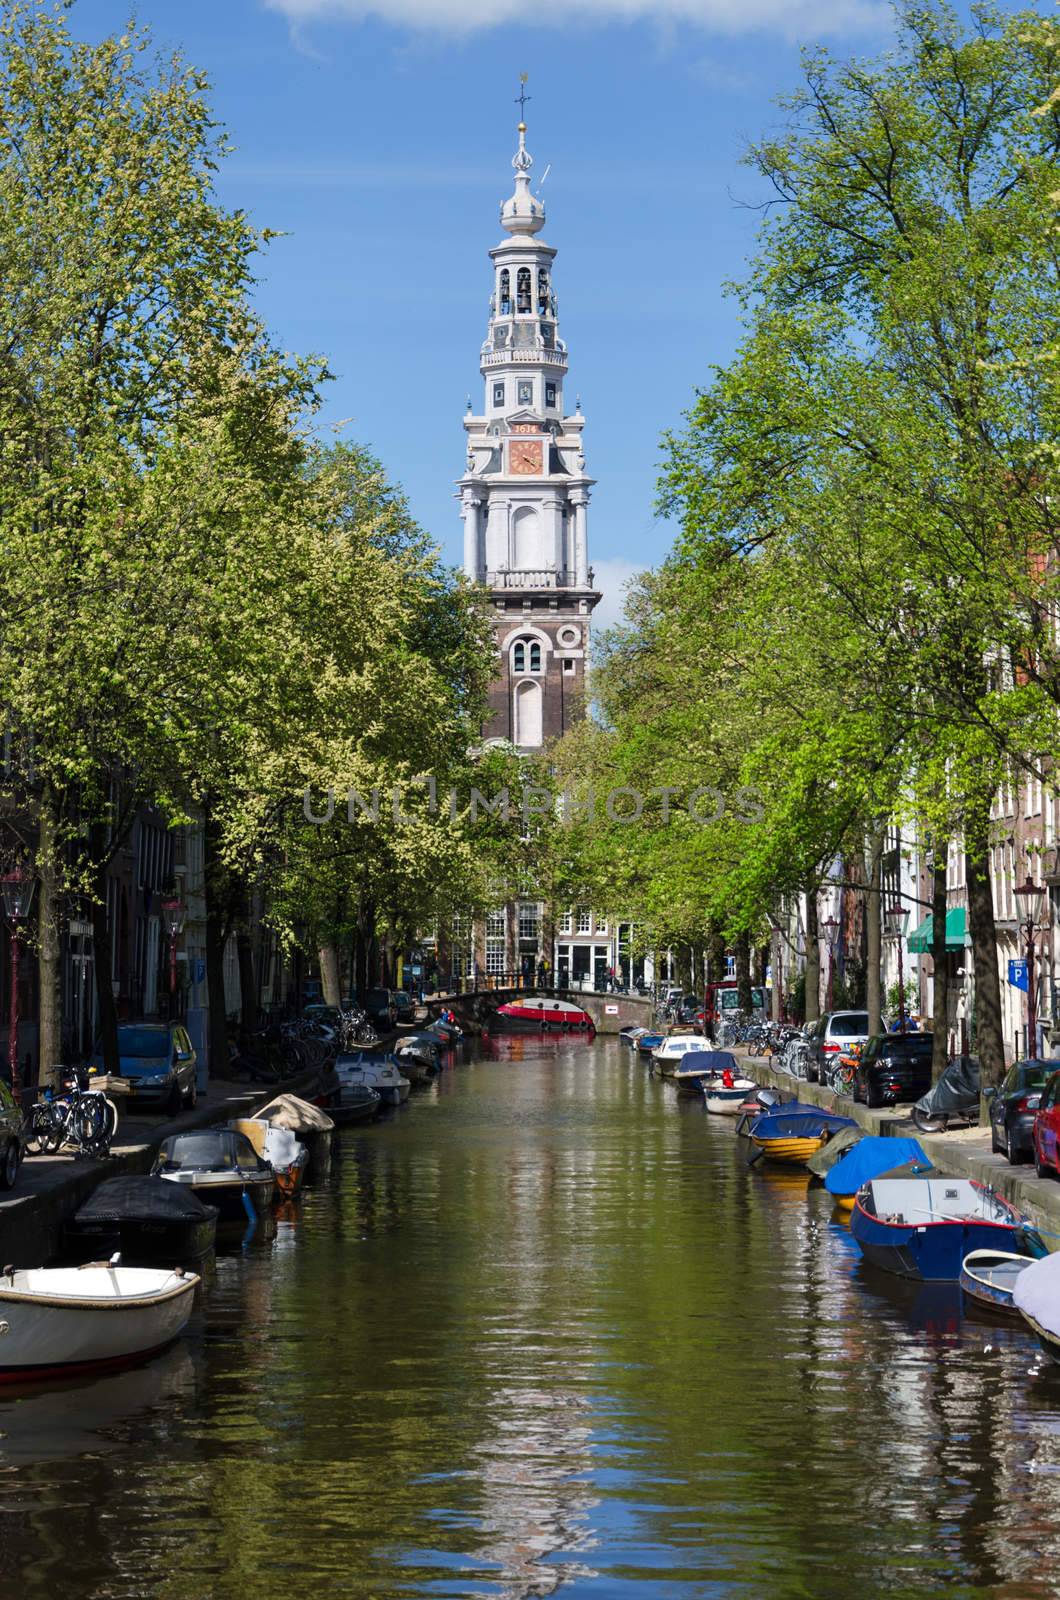 Zuiderkerk (Southern Church) in Amsterdam by siraanamwong